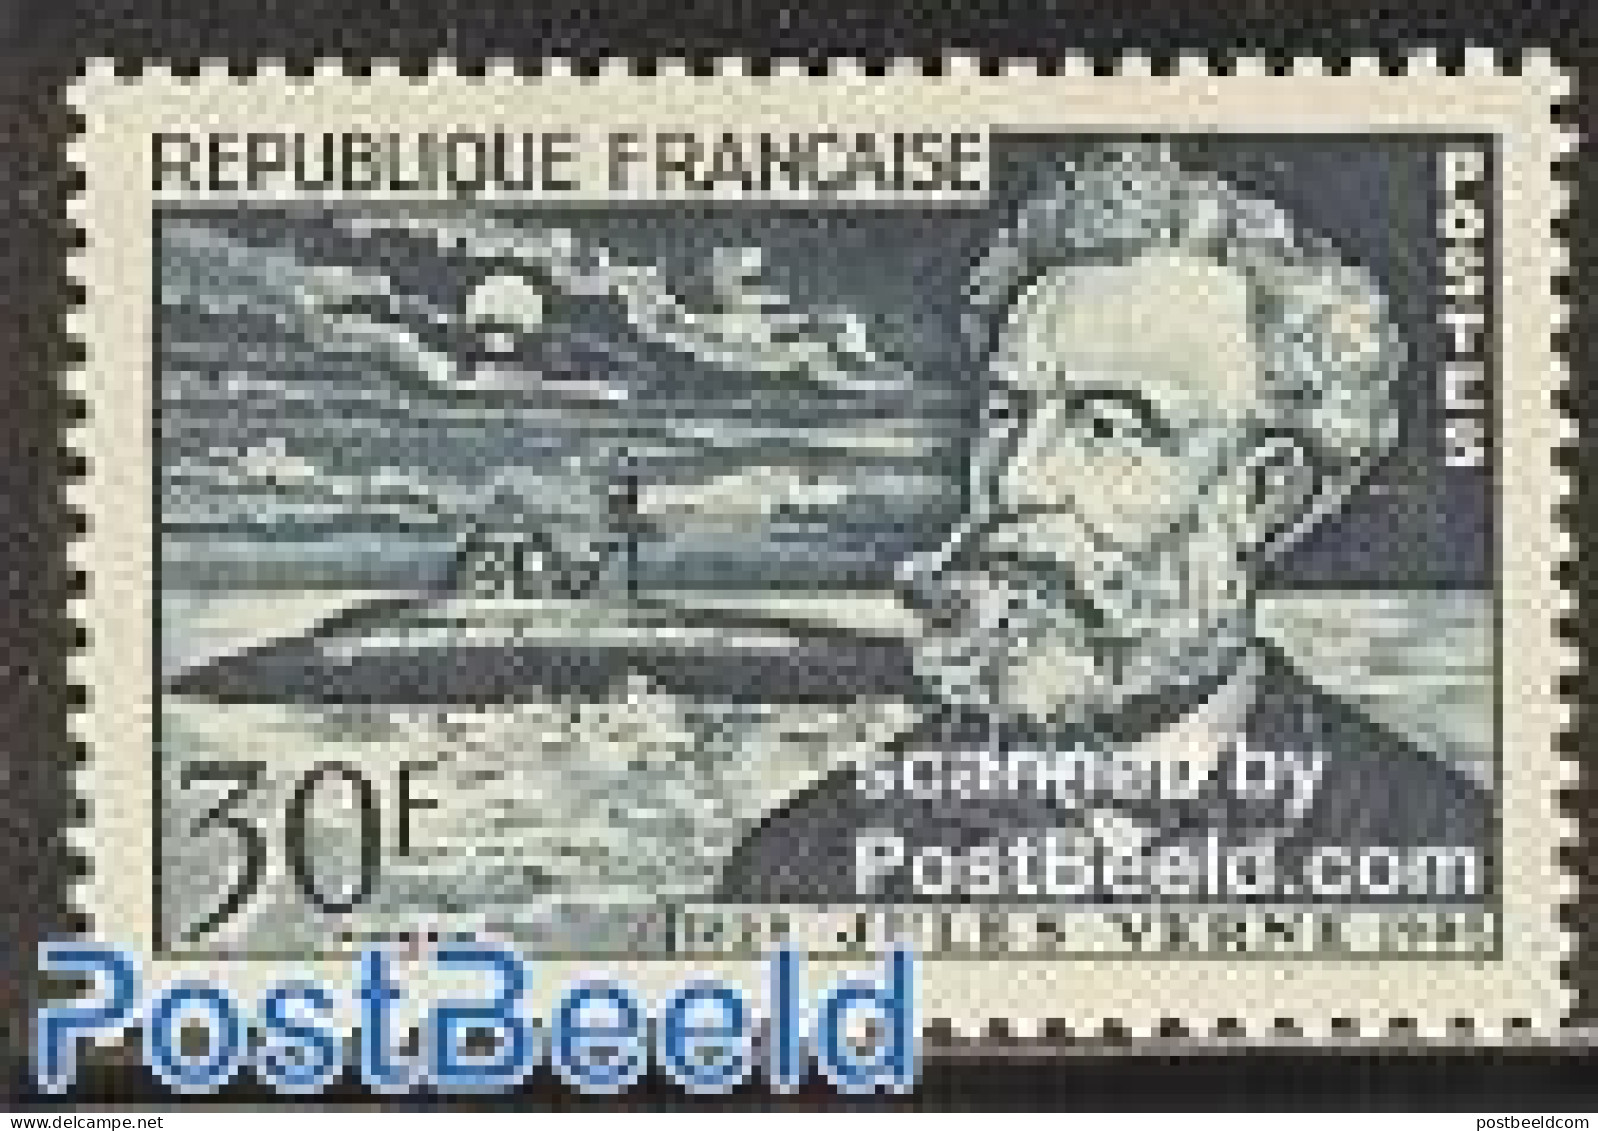 France 1955 Jules Verne 50th Death Anniv. 1v, Mint NH, Transport - Ships And Boats - Art - Authors - Jules Verne - Sci.. - Neufs